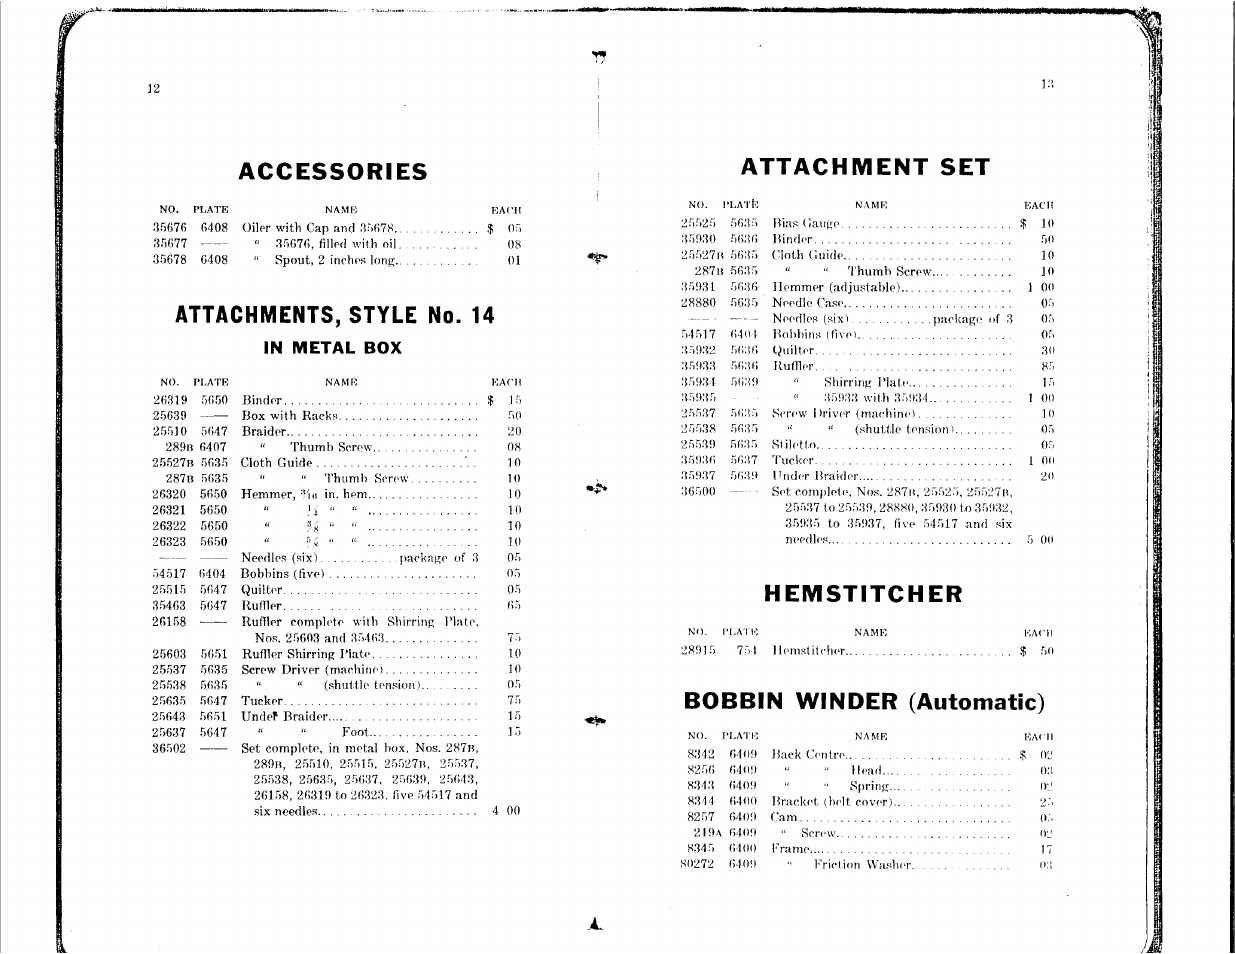 Accessories attachivient set, Hemstitcher, Bobbin winder (automatic) | Attachments, style no. 14 | SINGER 128-4 User Manual | Page 6 / 25